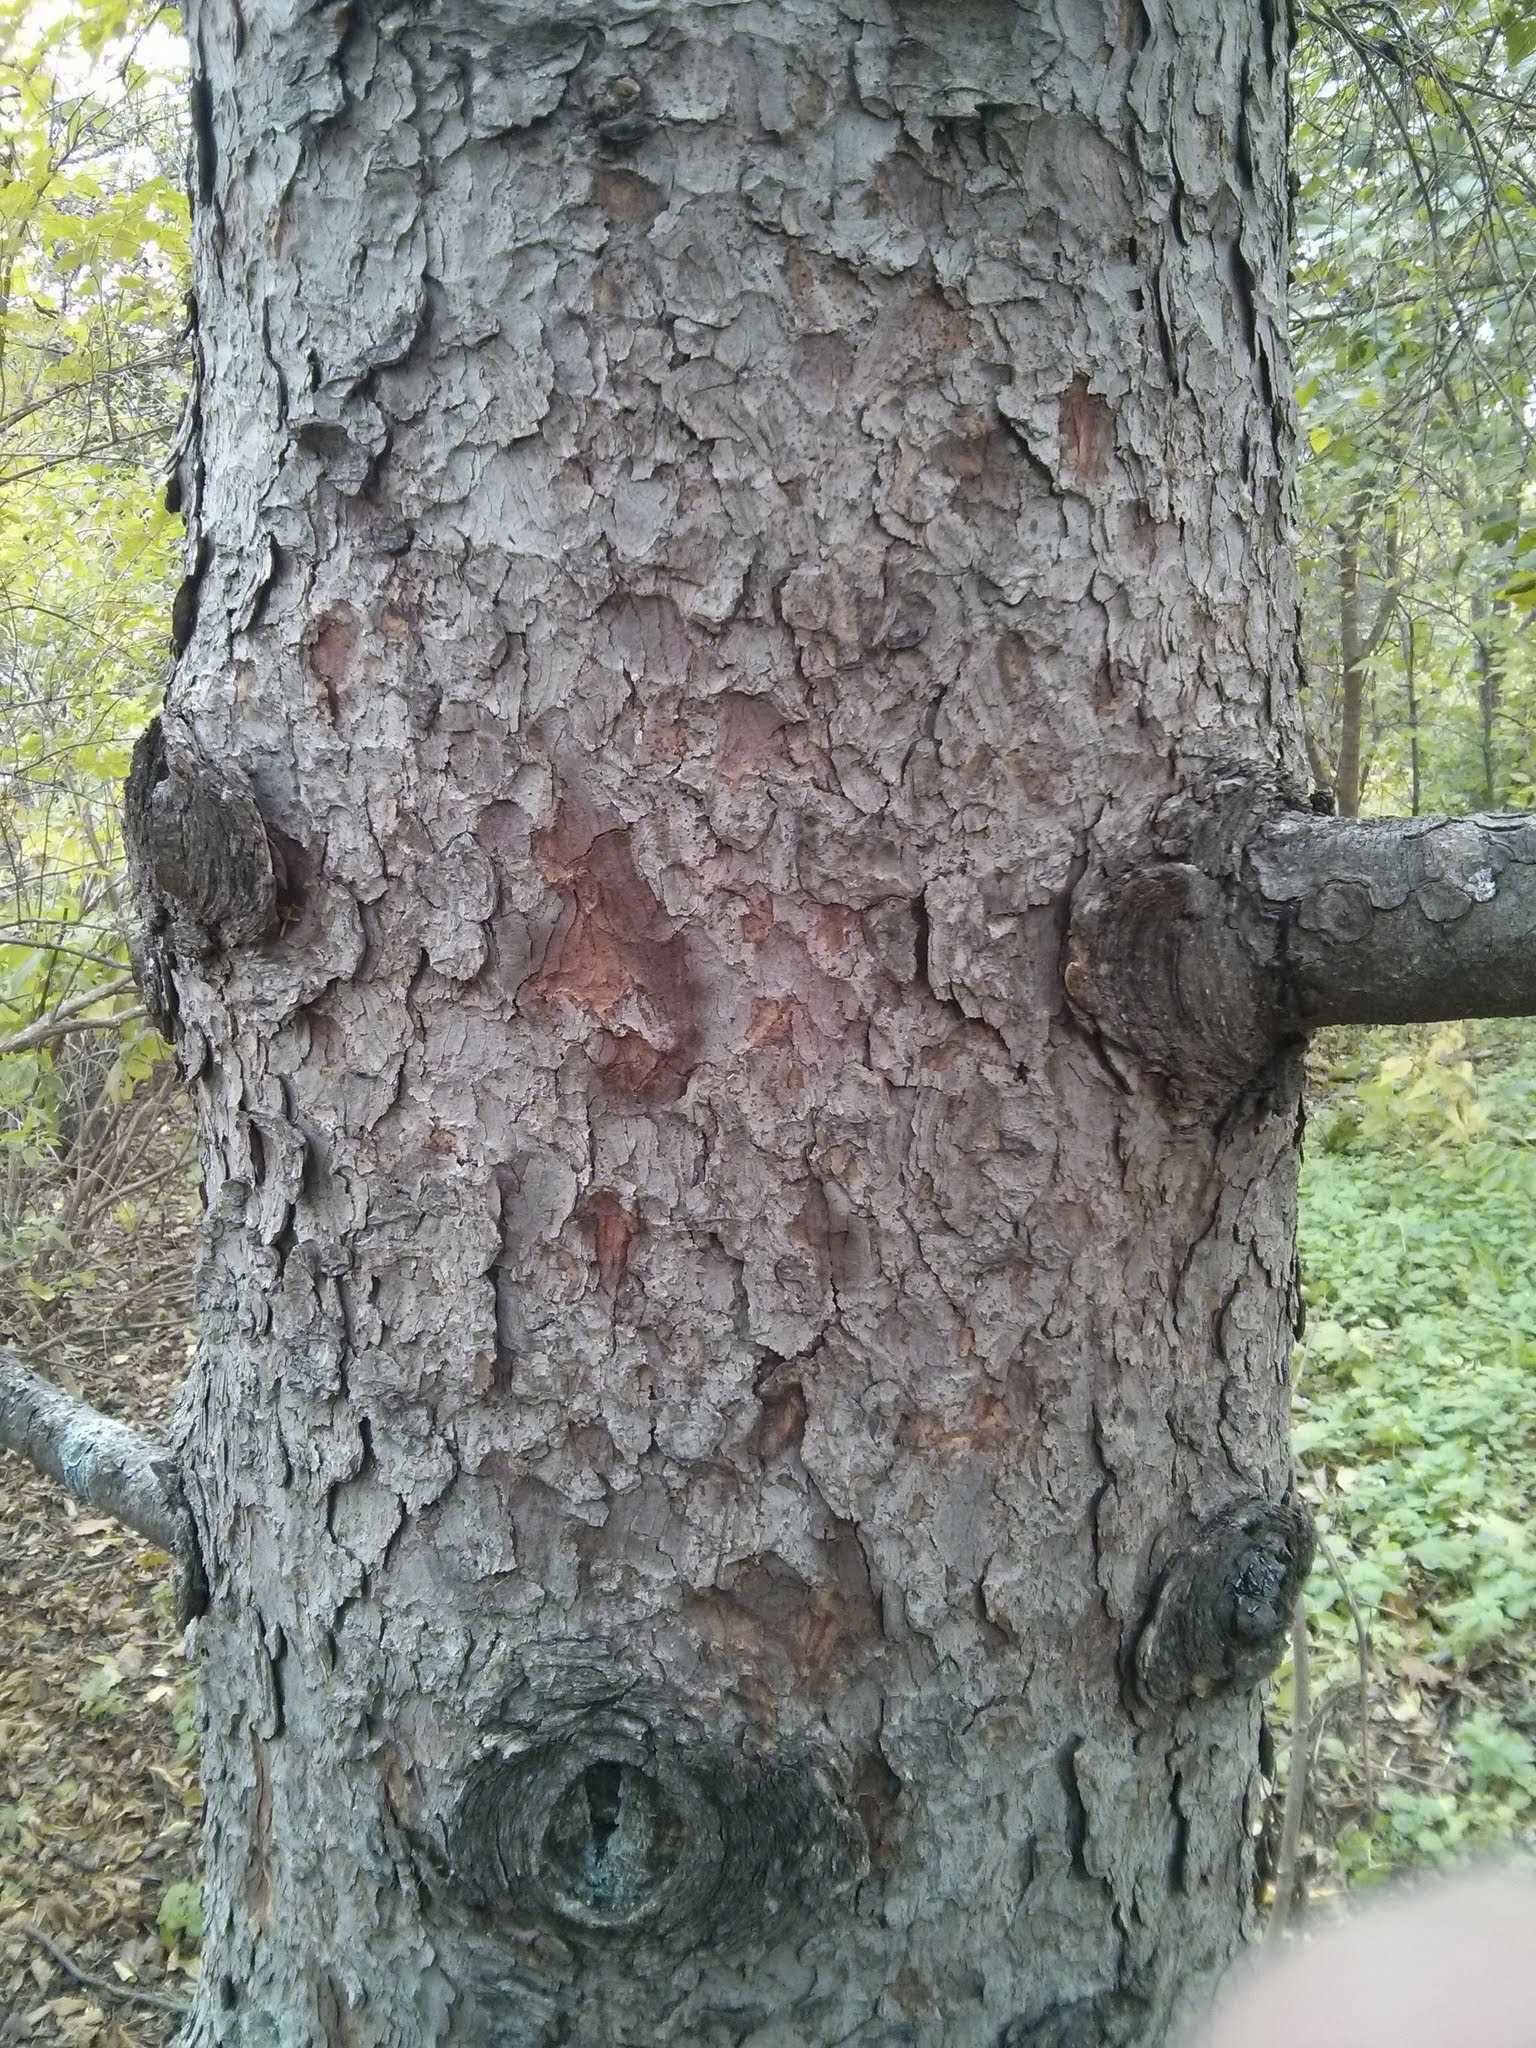 Norway spruce bark